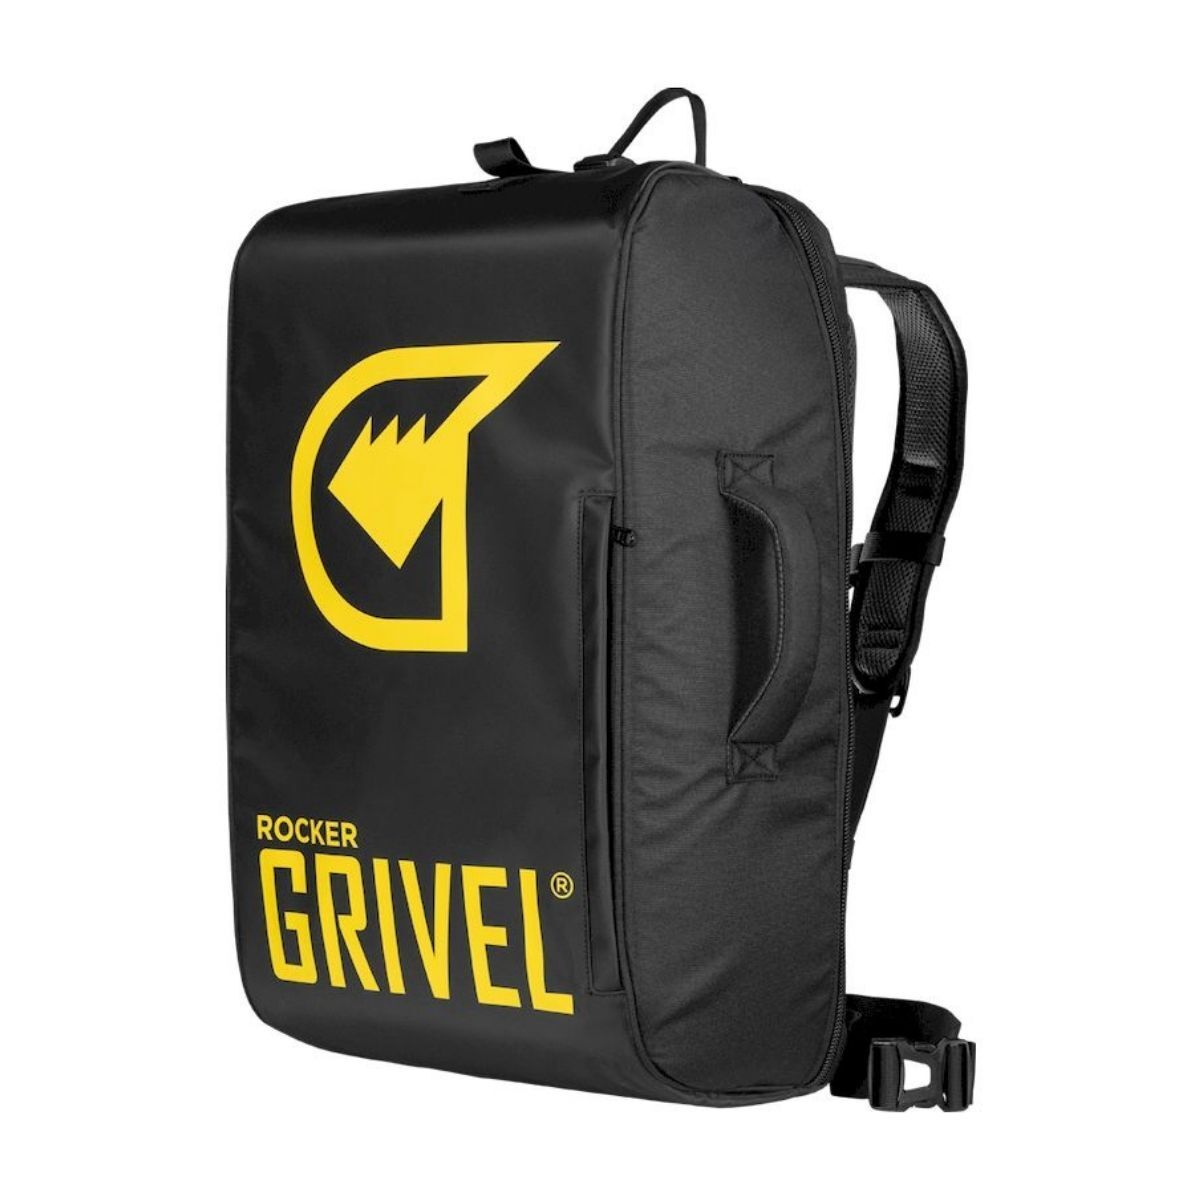 Grivel Rocker - Climbing backpack